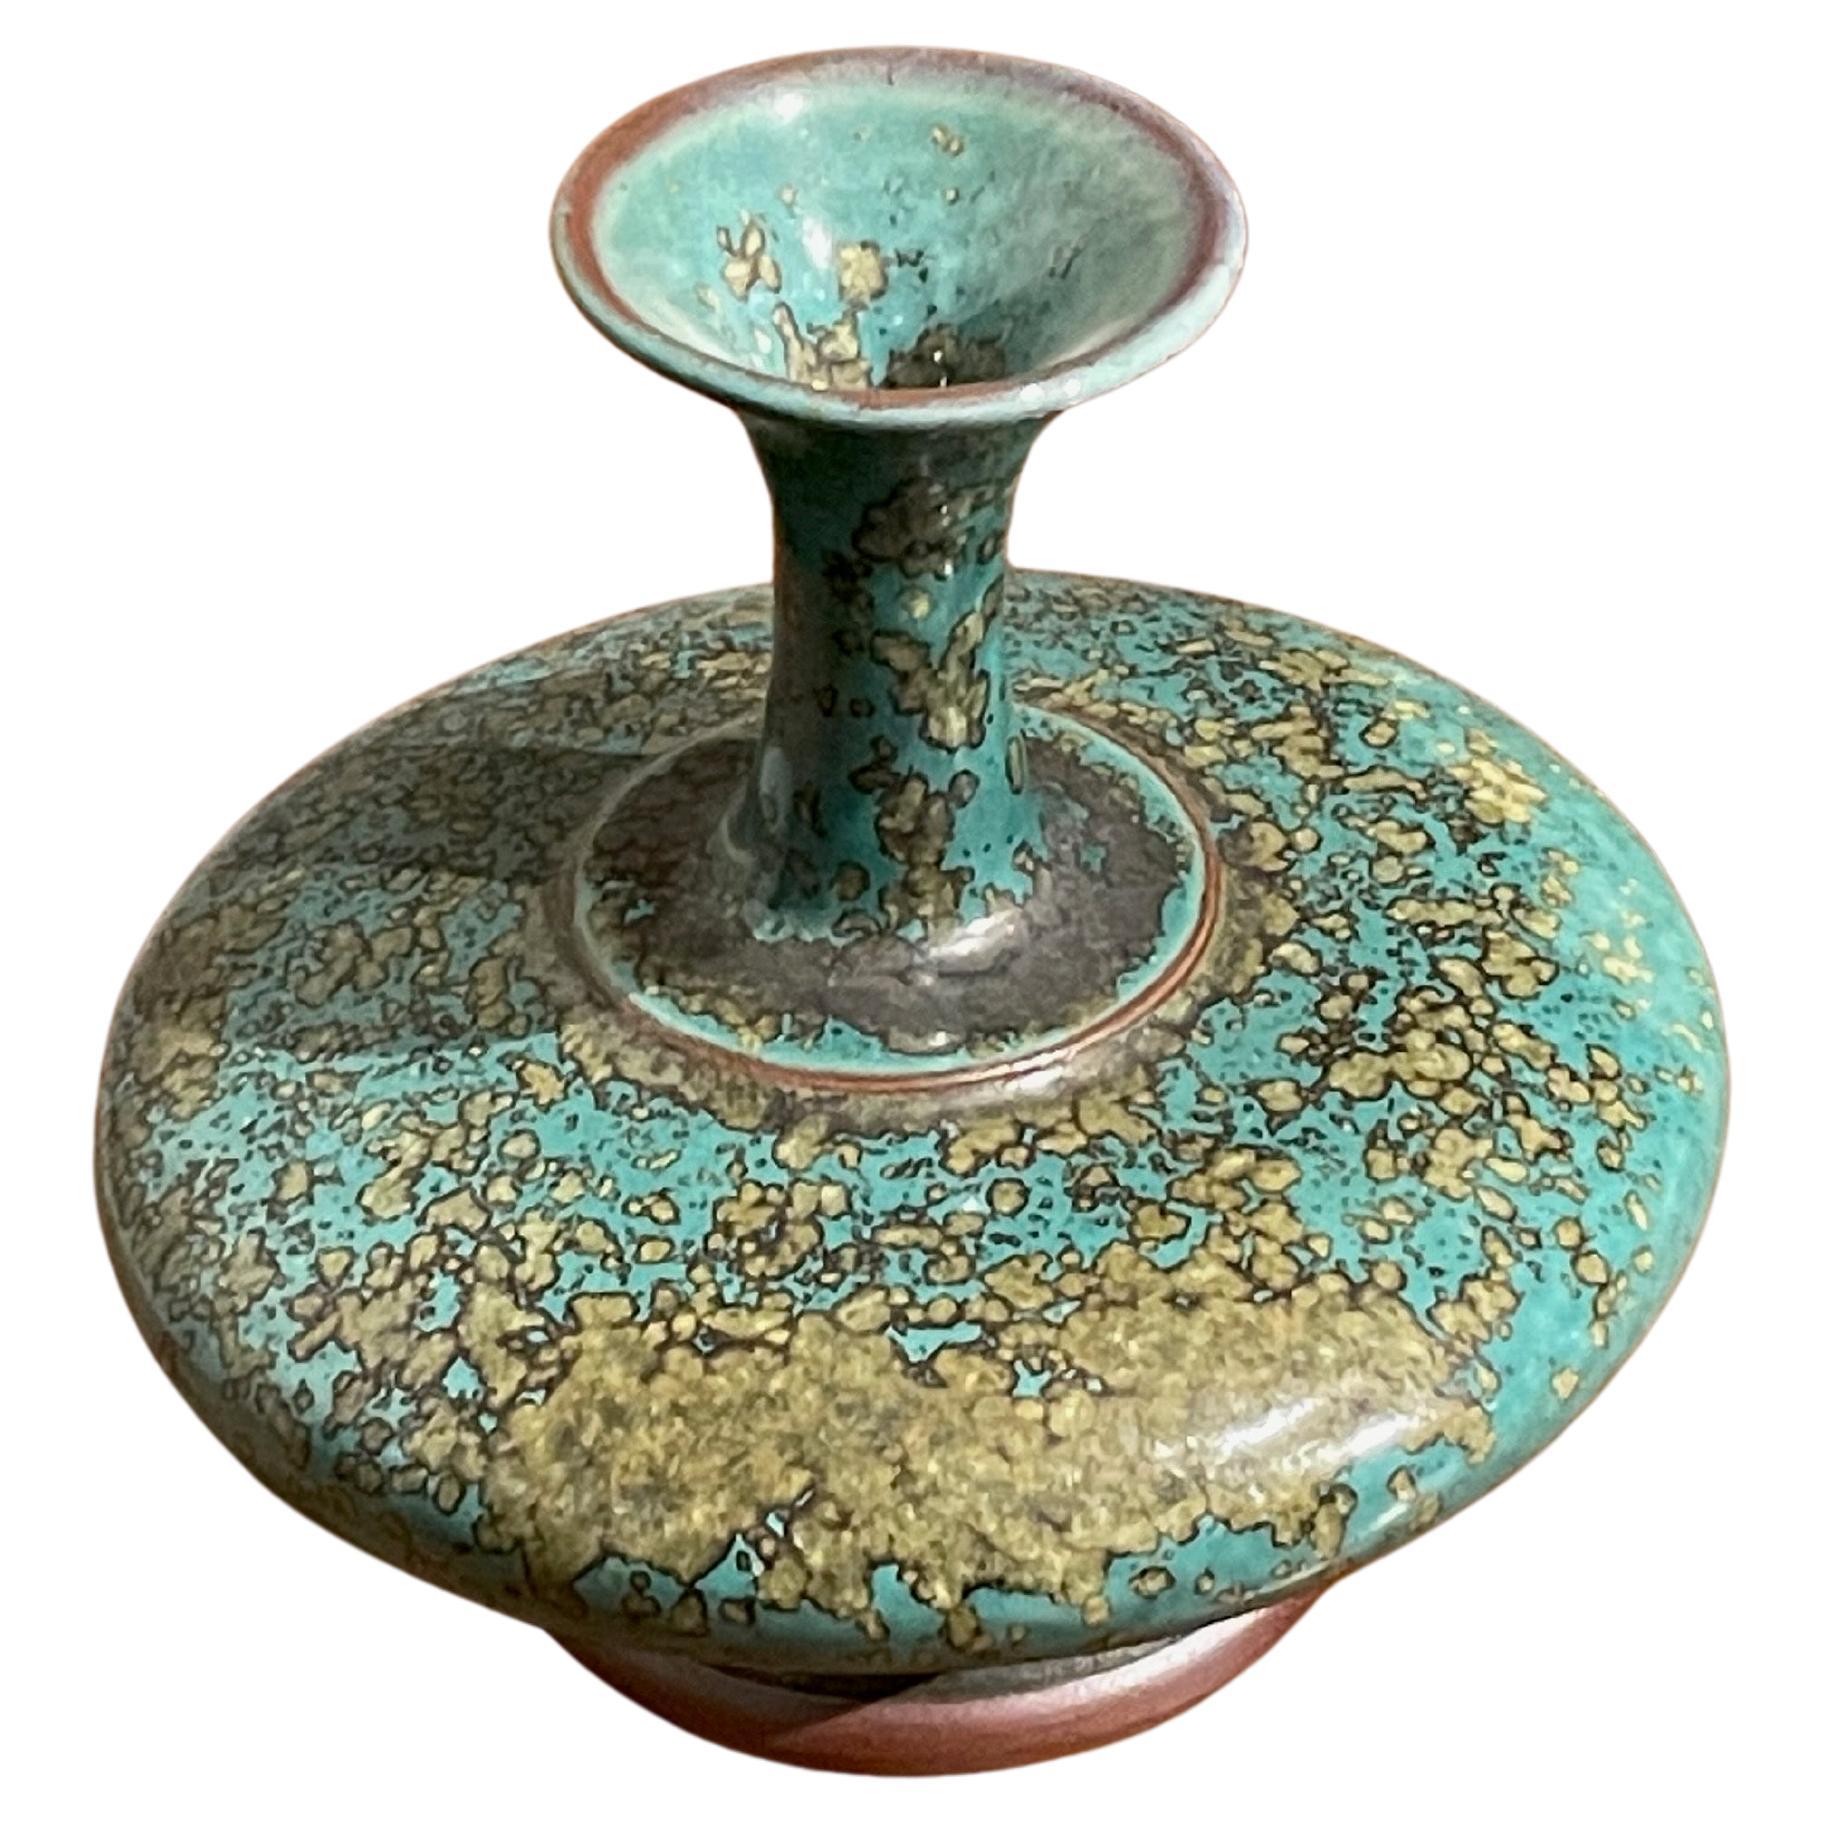 Turquoise with Gold Speckled Glaze Flat Shape Base Vase, China, Contemporary